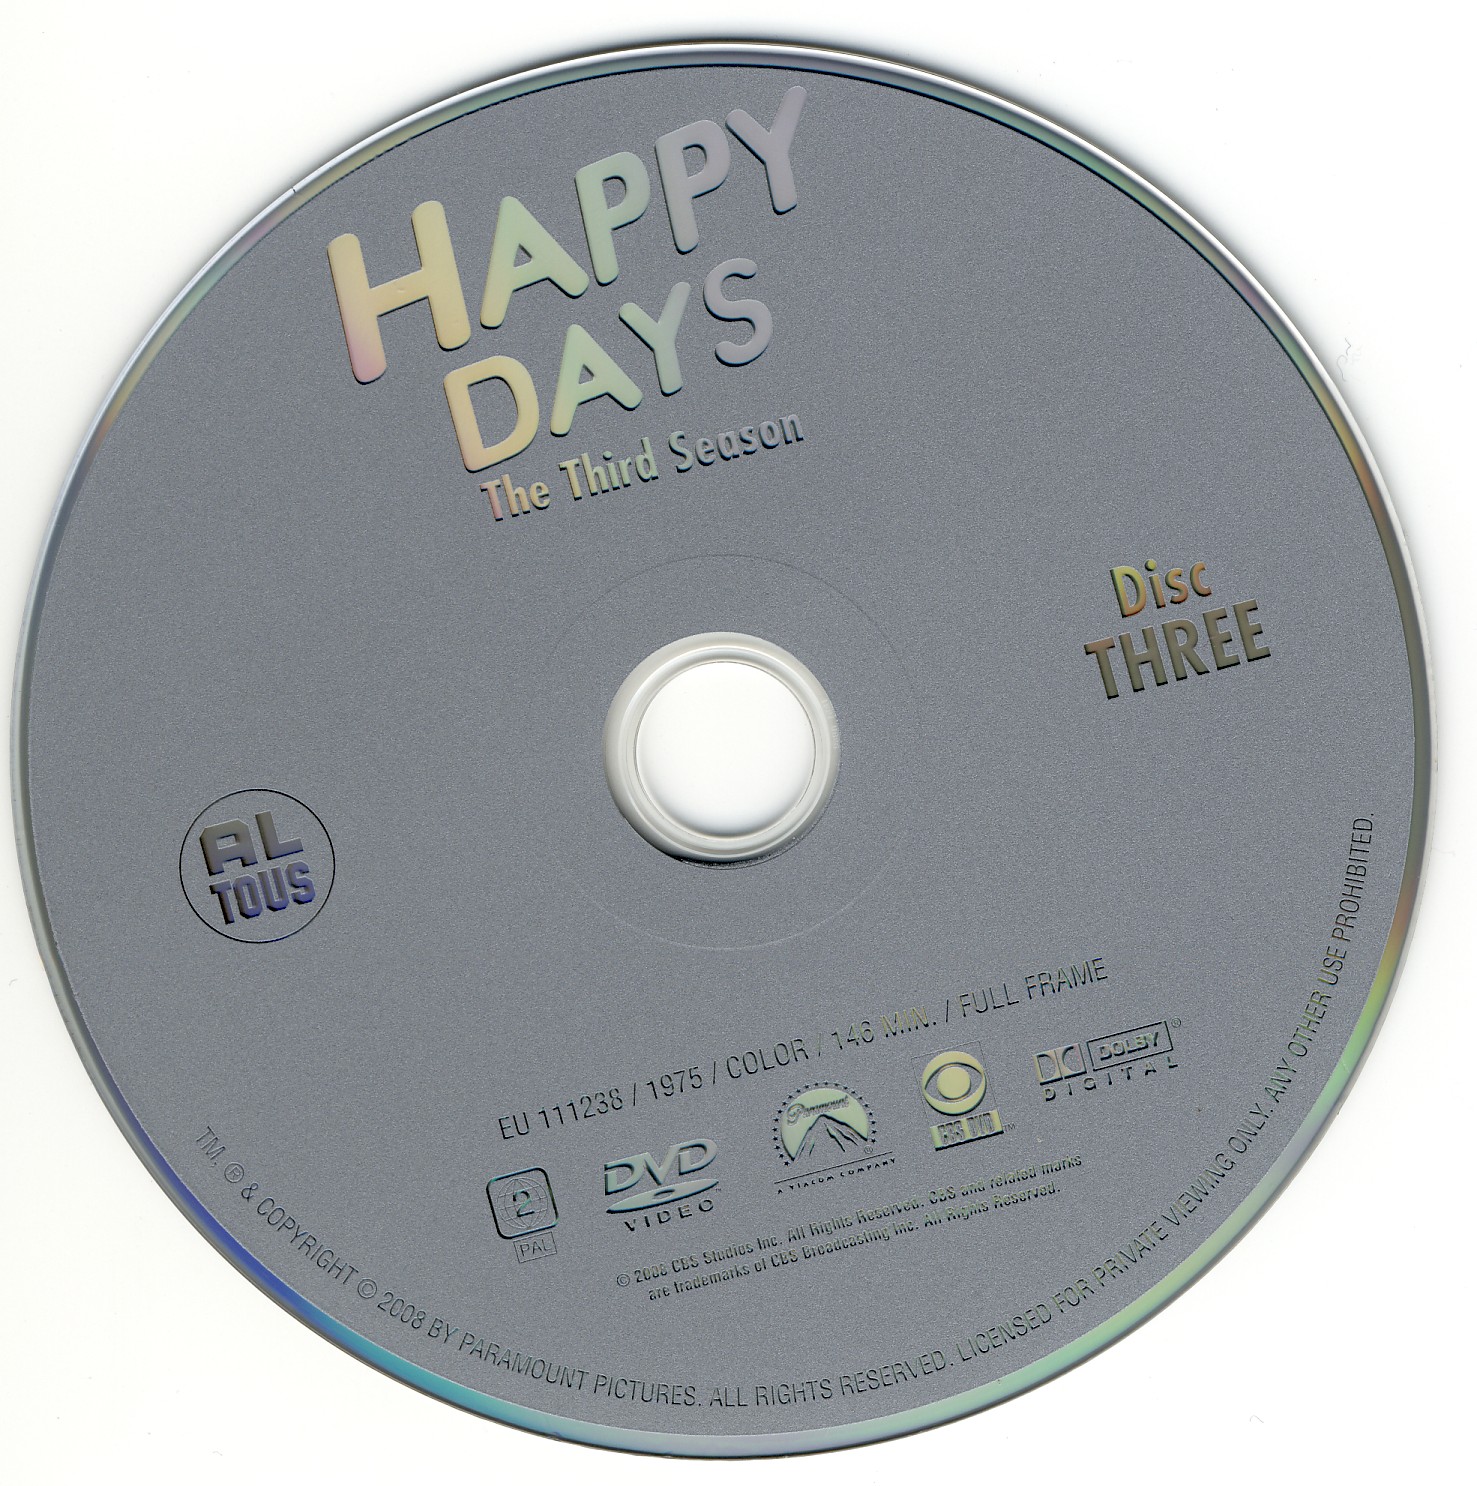 Happy days Saison 03 DISC 3